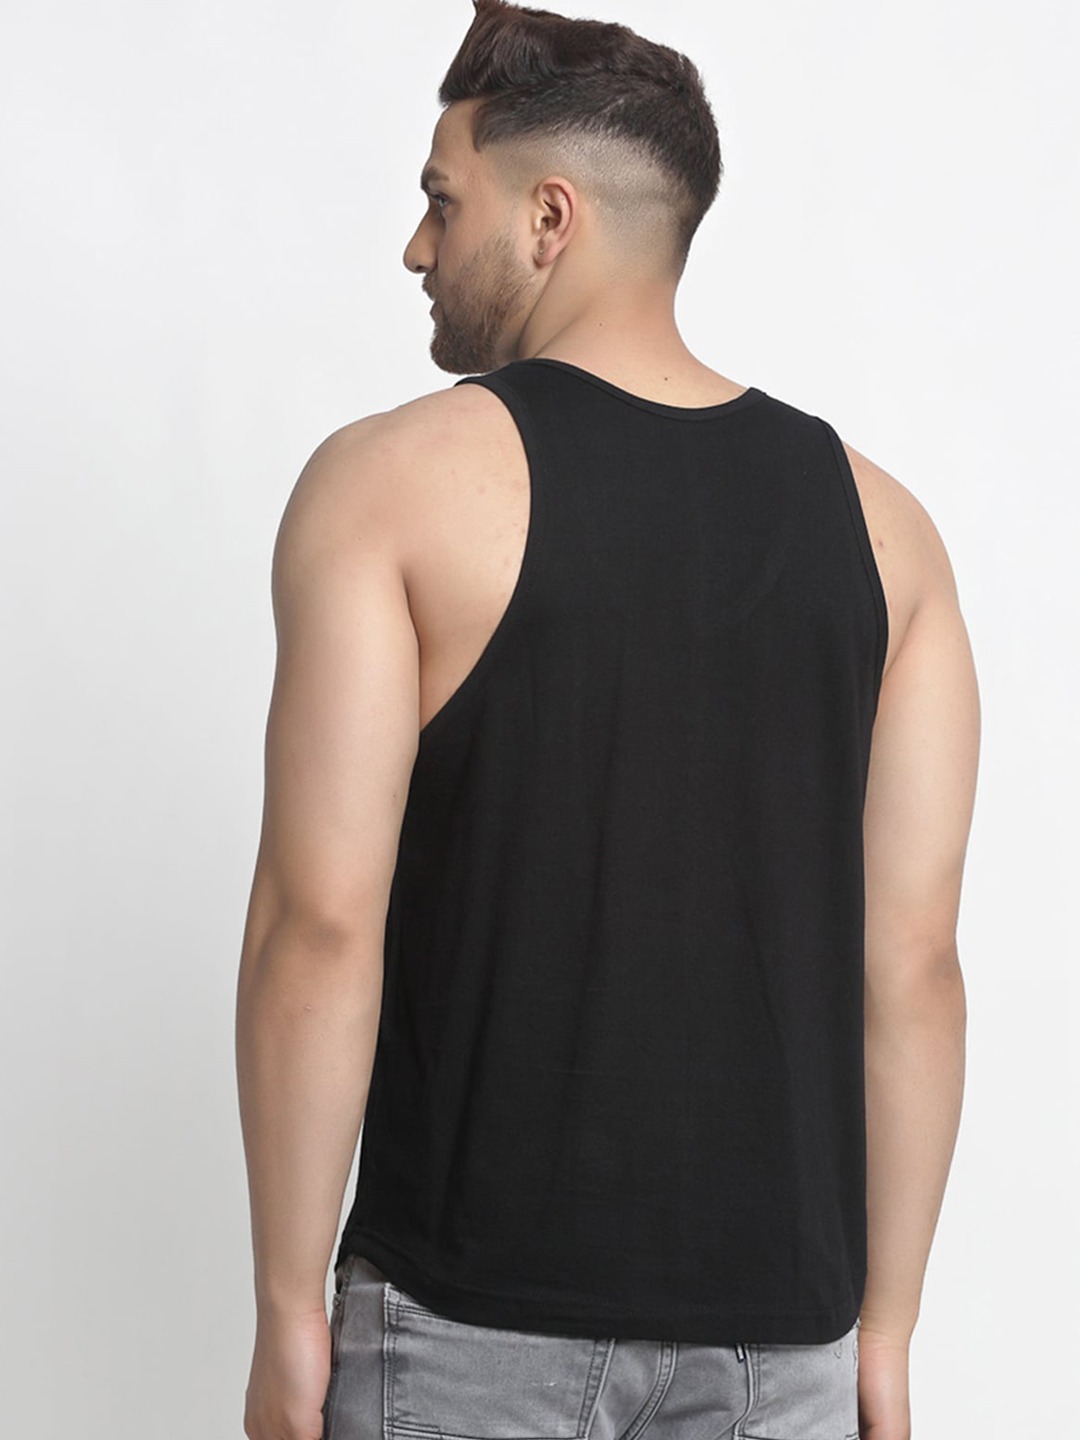 Clothing Innerwear Vests | Friskers Men Black & White Printed Cotton Apple Cut Gym Vest - CT12513